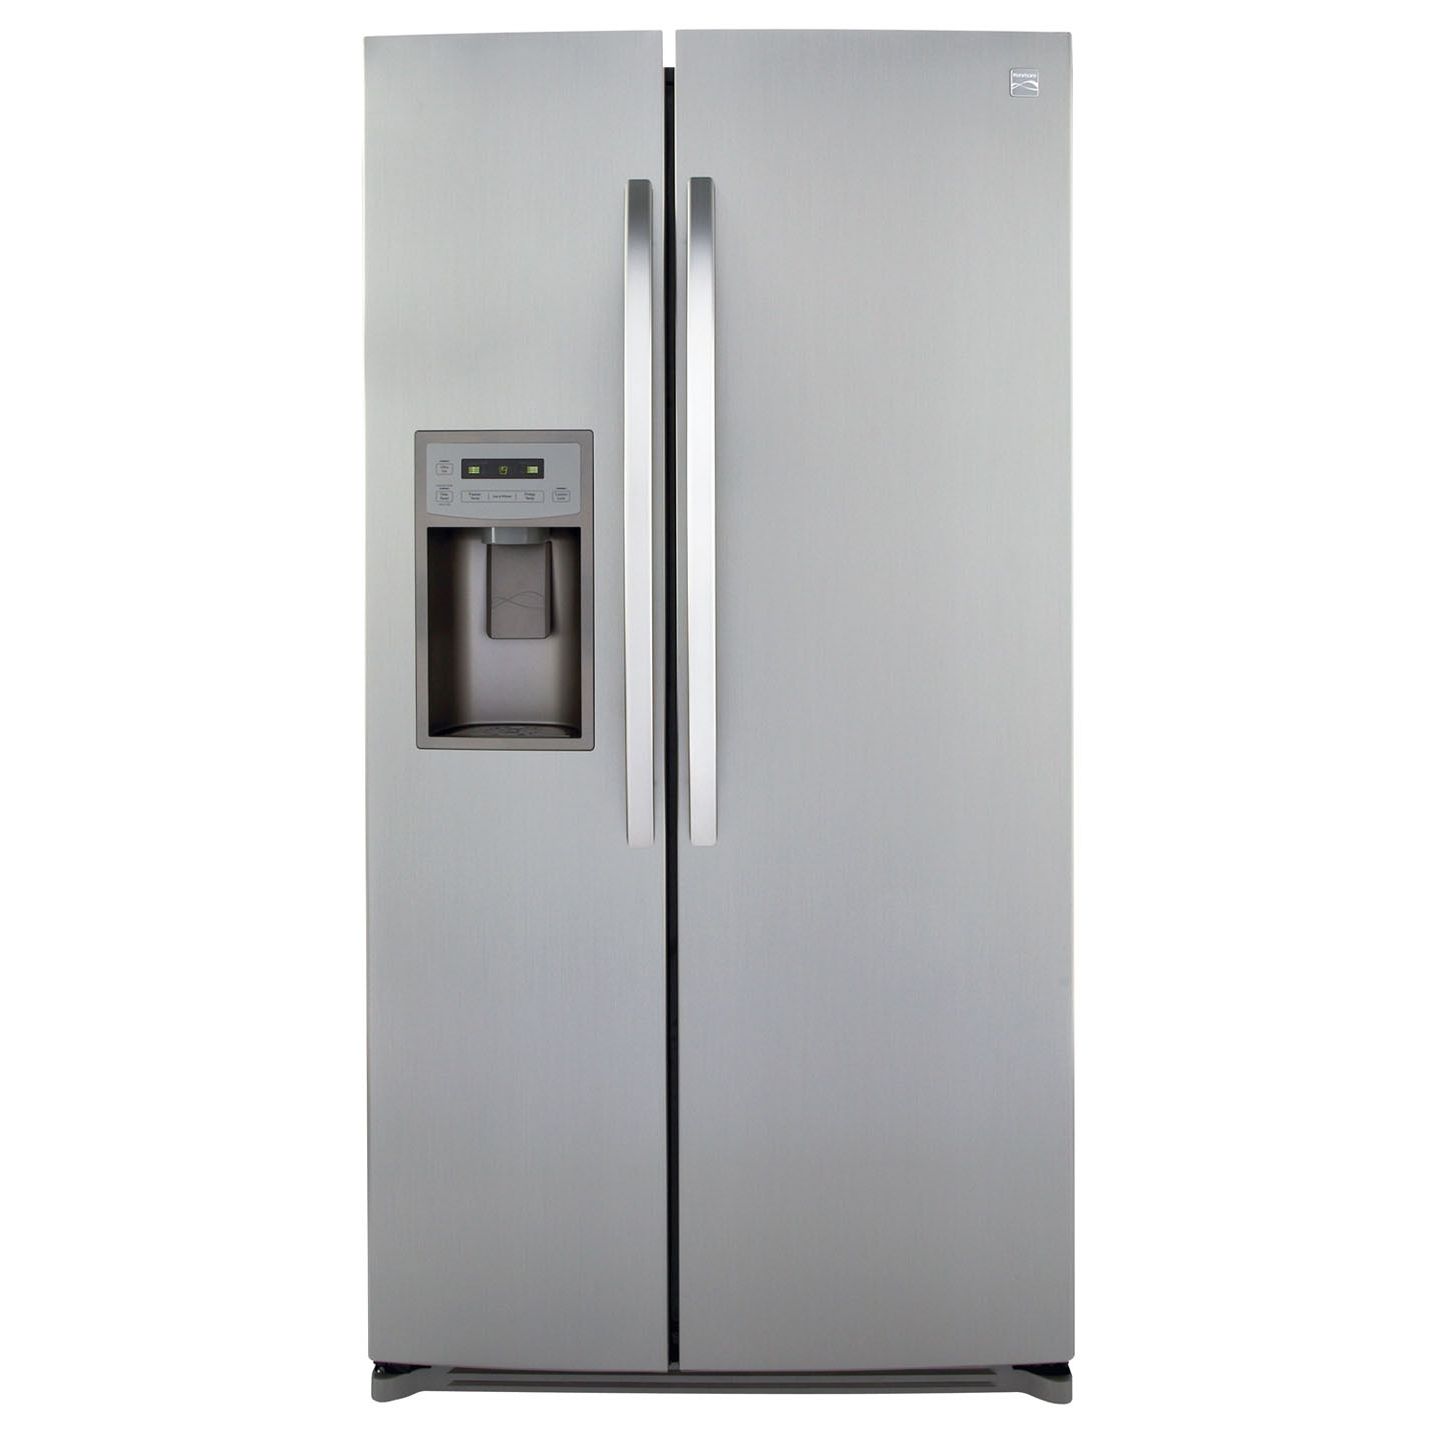 Холодильник Siemens Side by Side с ледогенератором. Холодильник kenmore Elite. Teka холодильник 900 с ледогенератором. Холодильник Samsung Side by Side с ледогенератором.